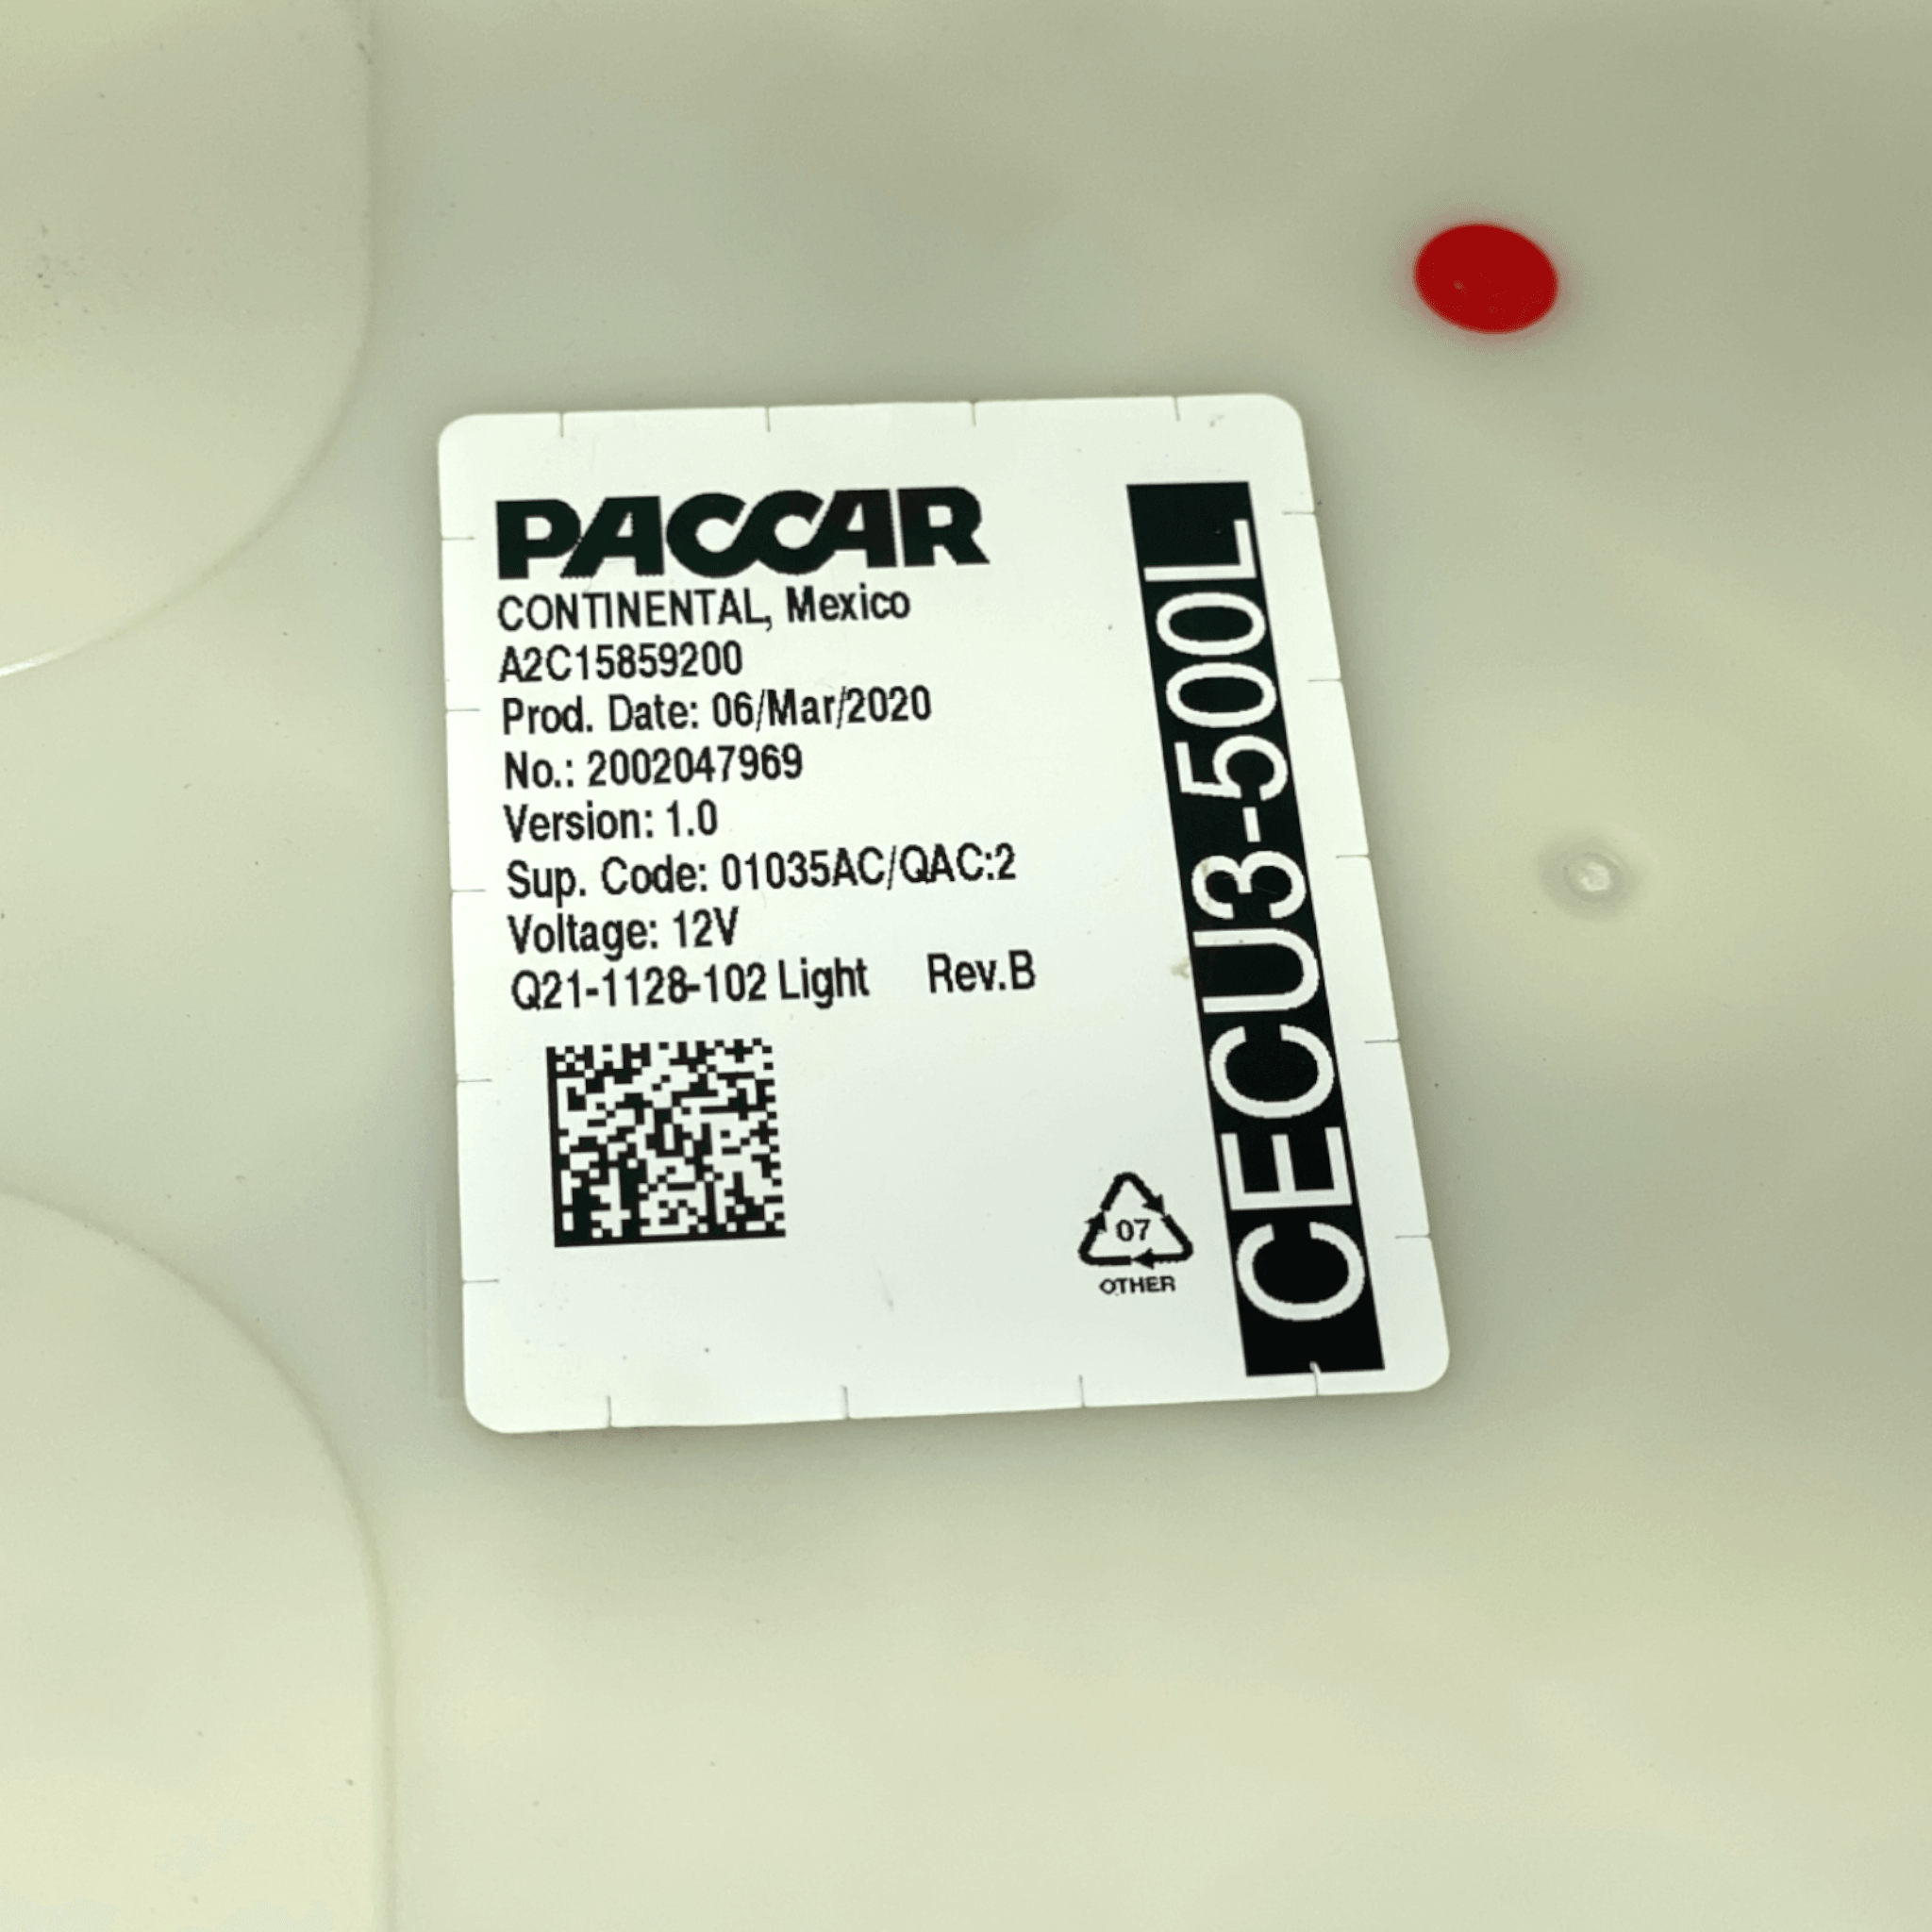 Q21-1128-102 Genuine Paccar Cab Control Module - ADVANCED TRUCK PARTS